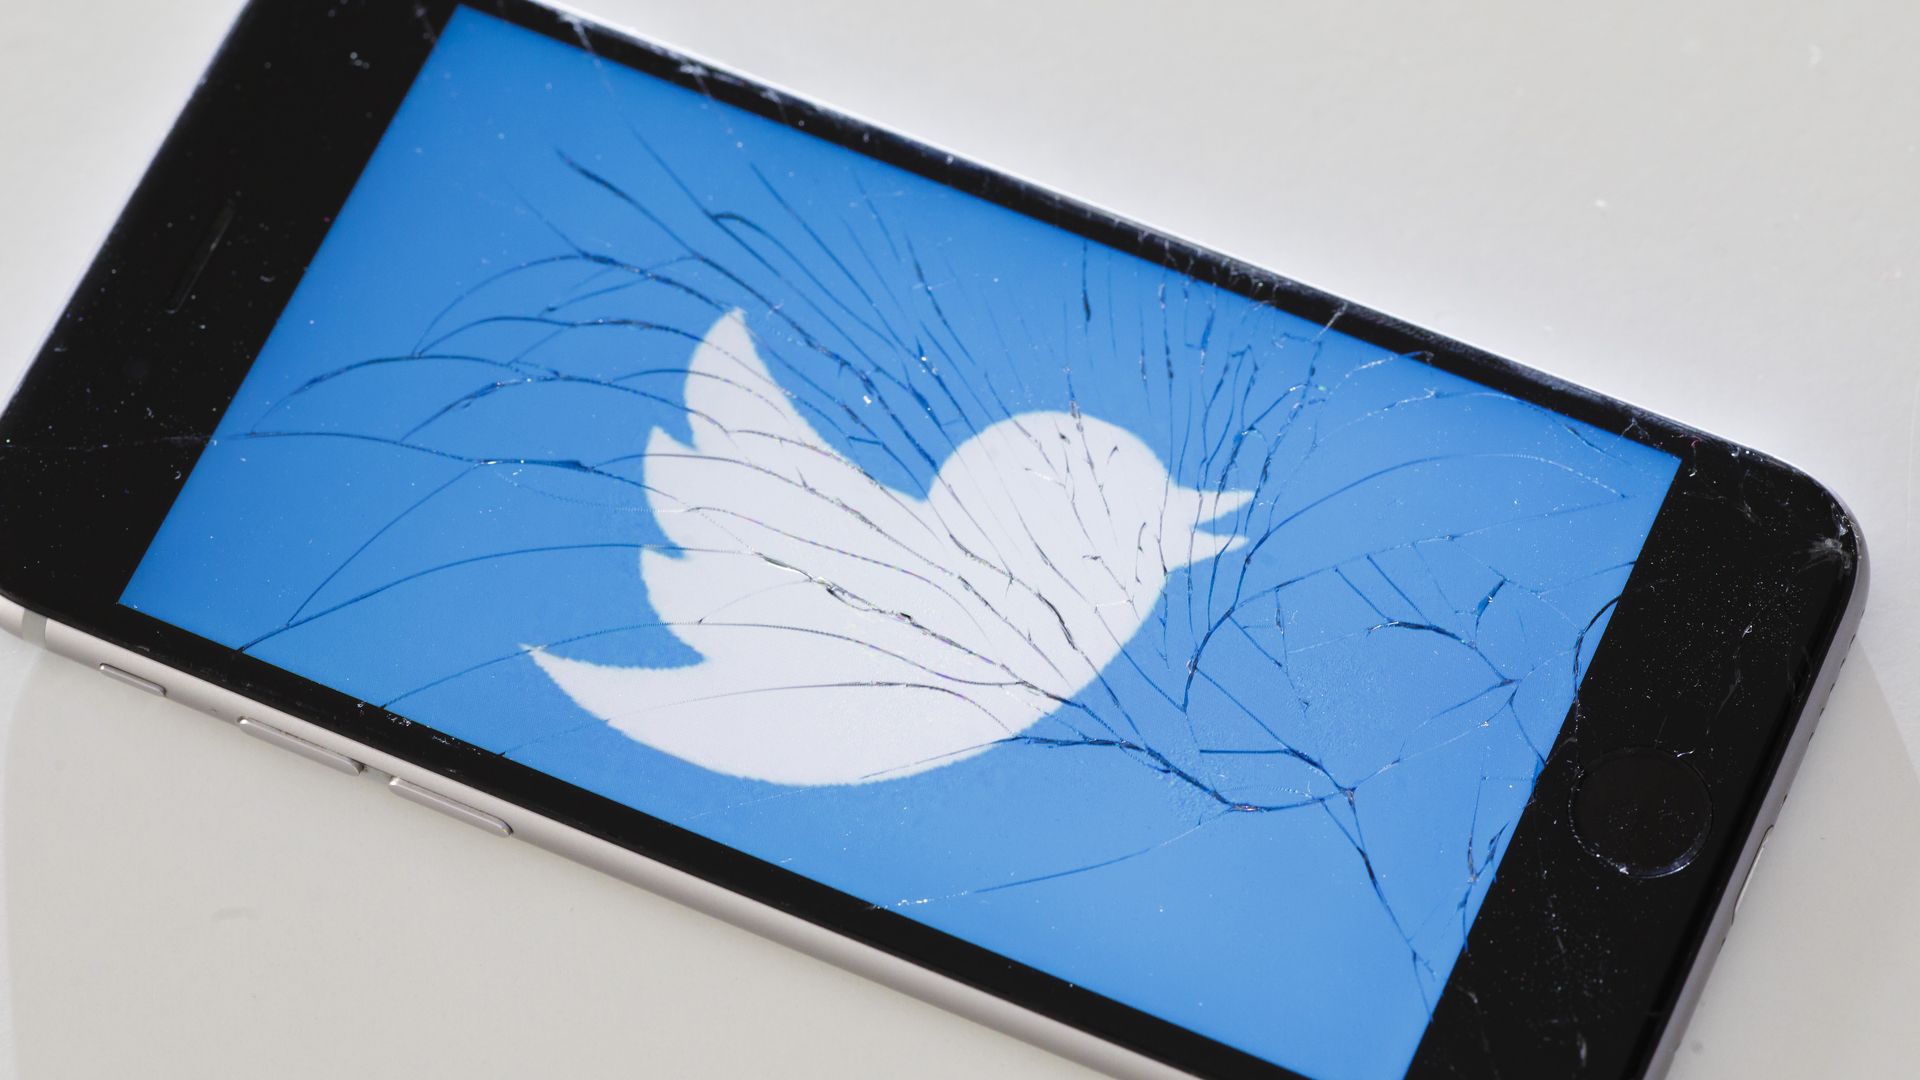 A broken phone showing the twitter logo